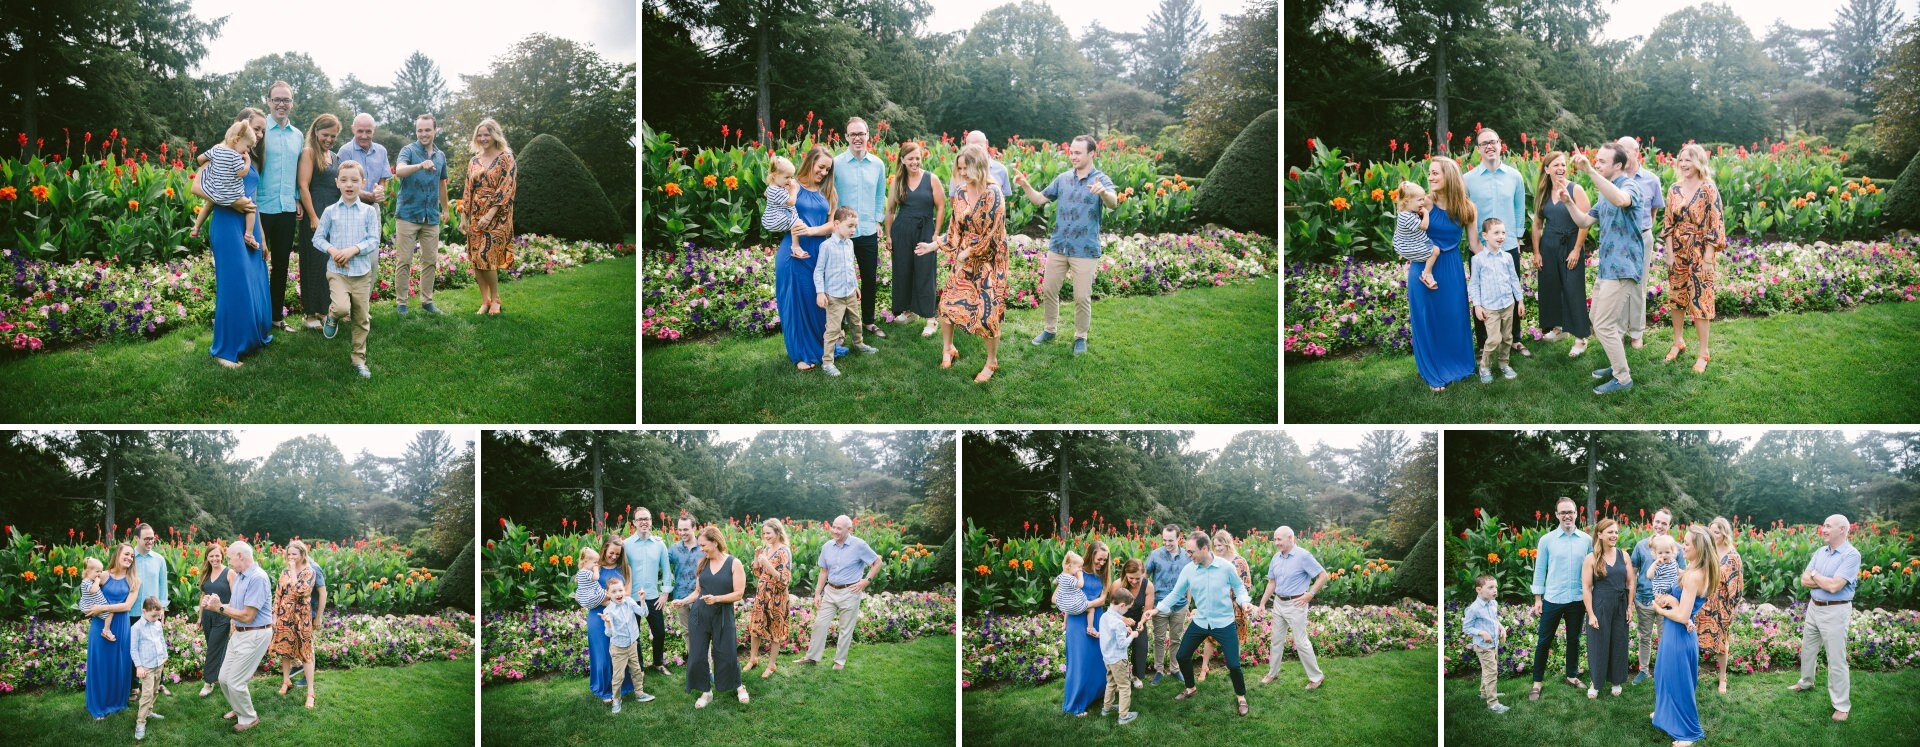 Cleveland Family Portrait Photographer 1 8.jpg